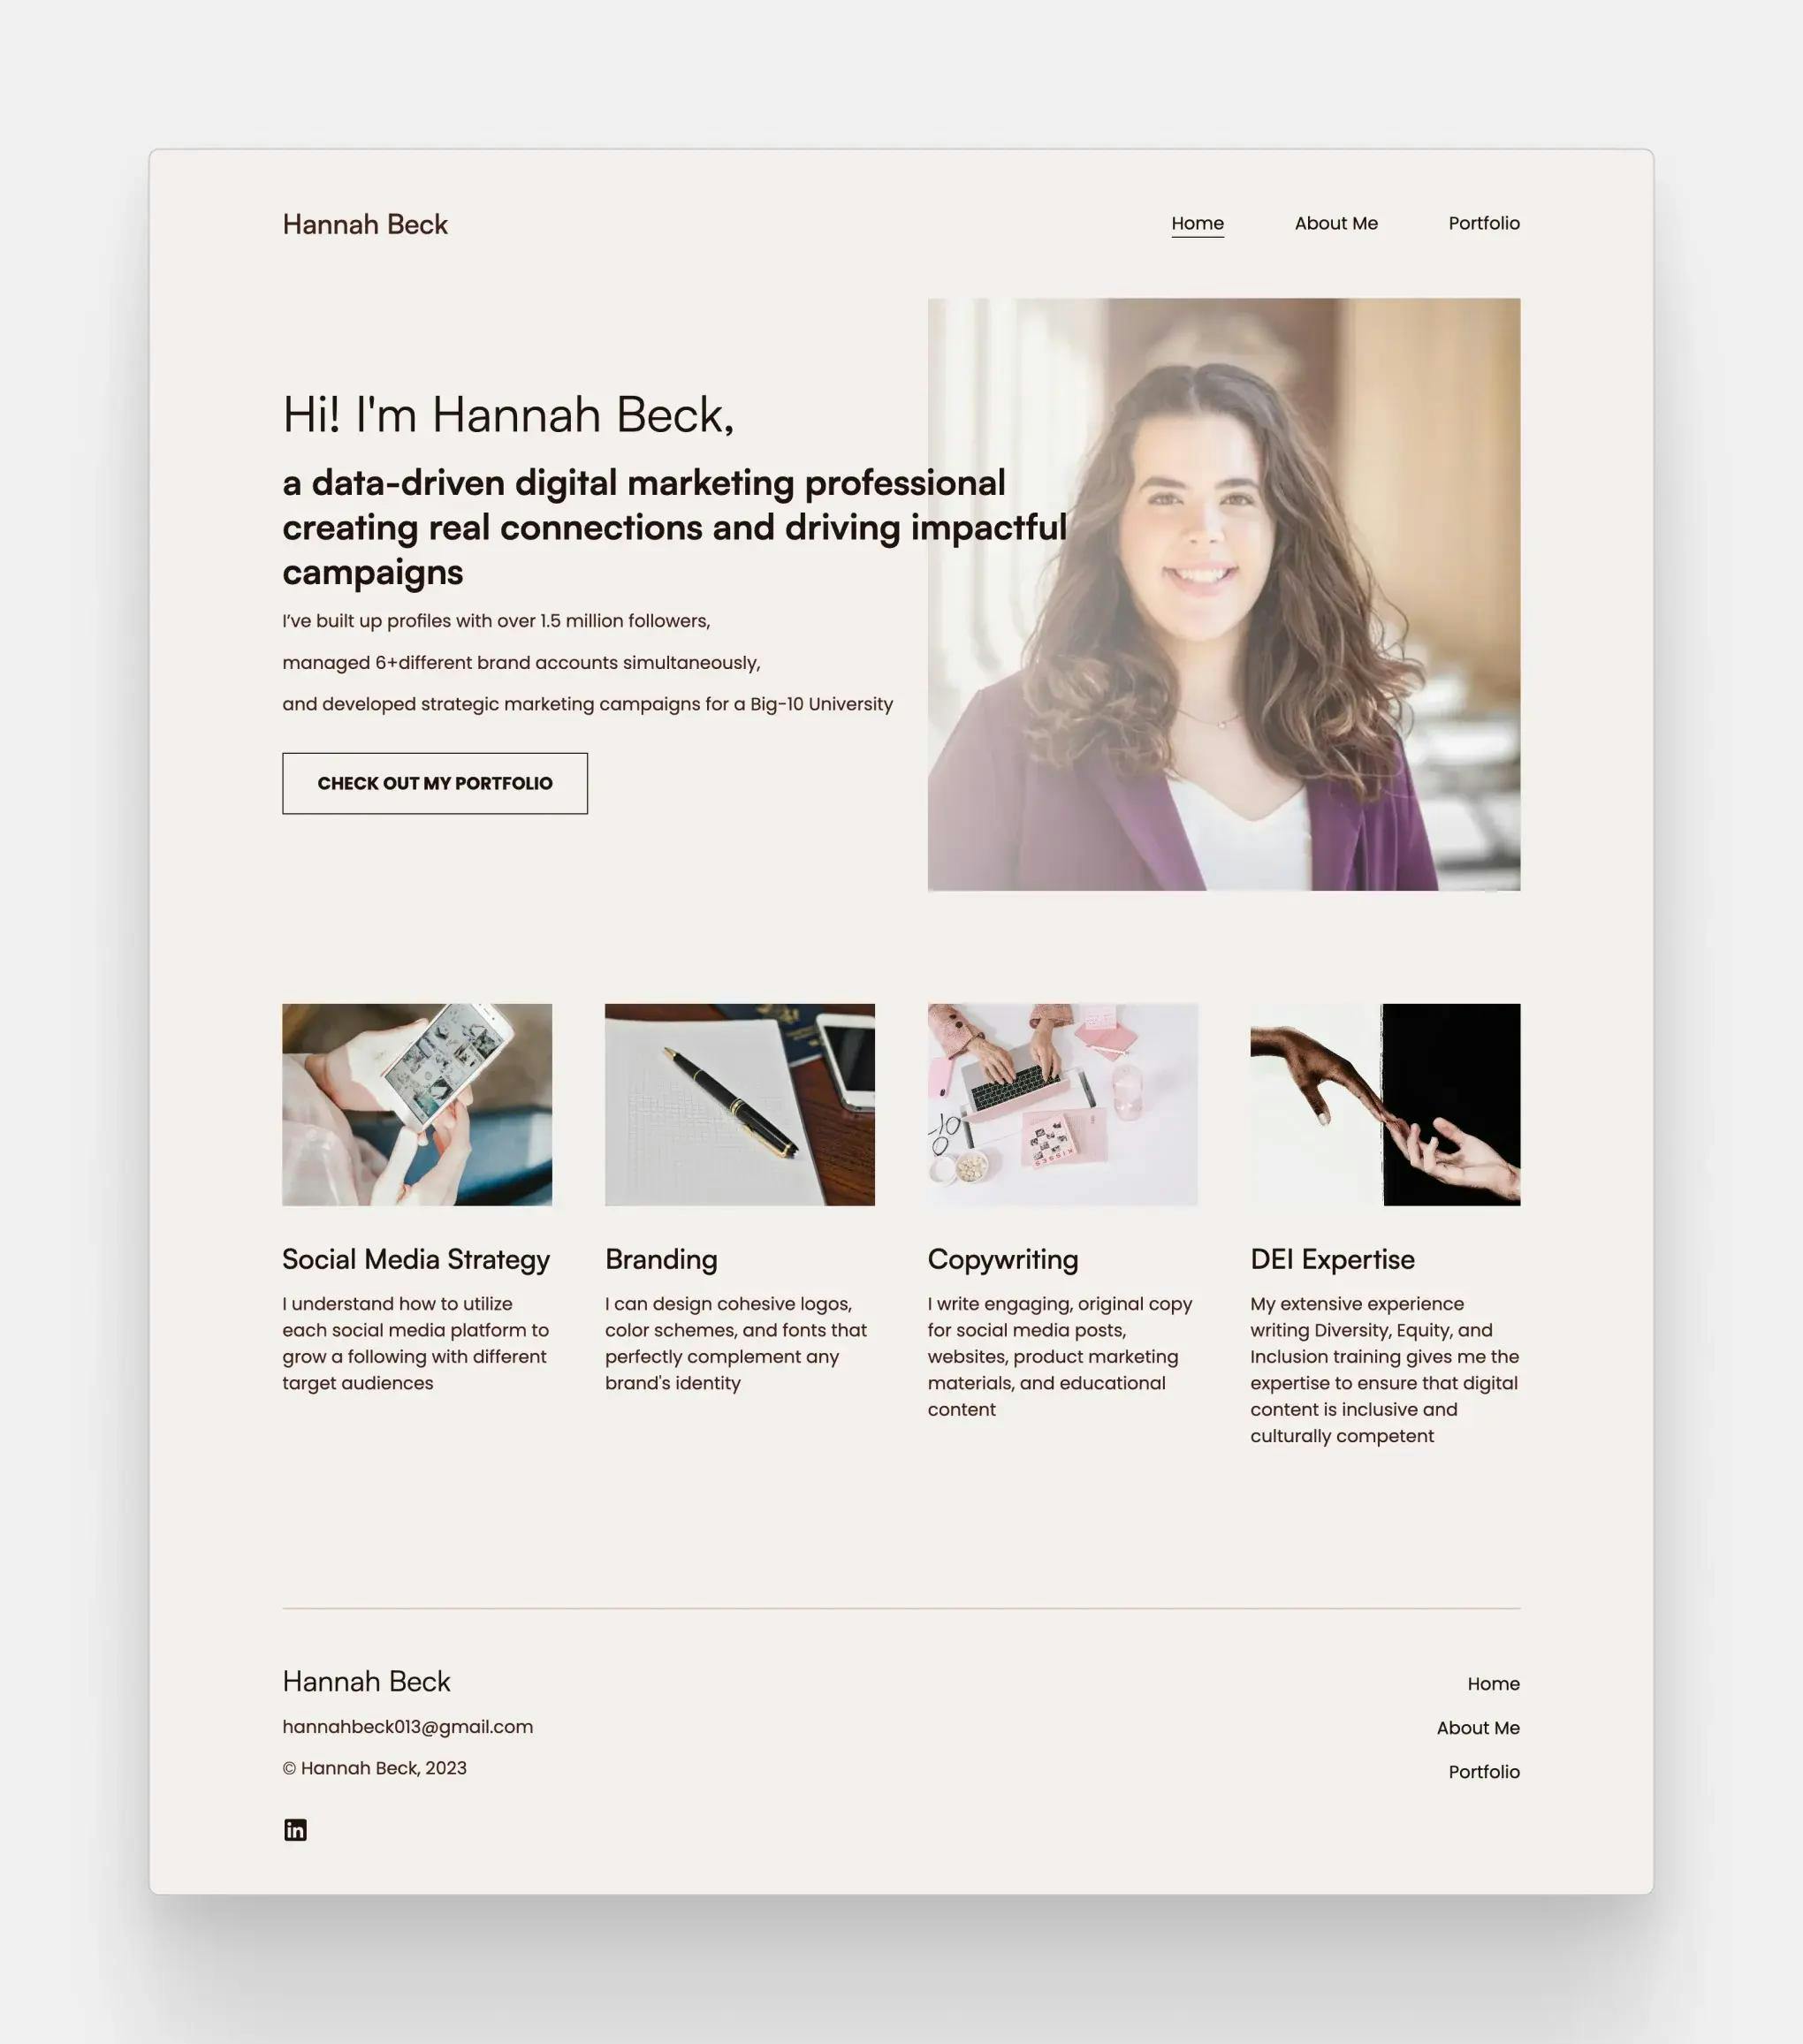 Screenshot of the homepage of Hannah Beck's digital marketing portfolio website, including social media strategy work